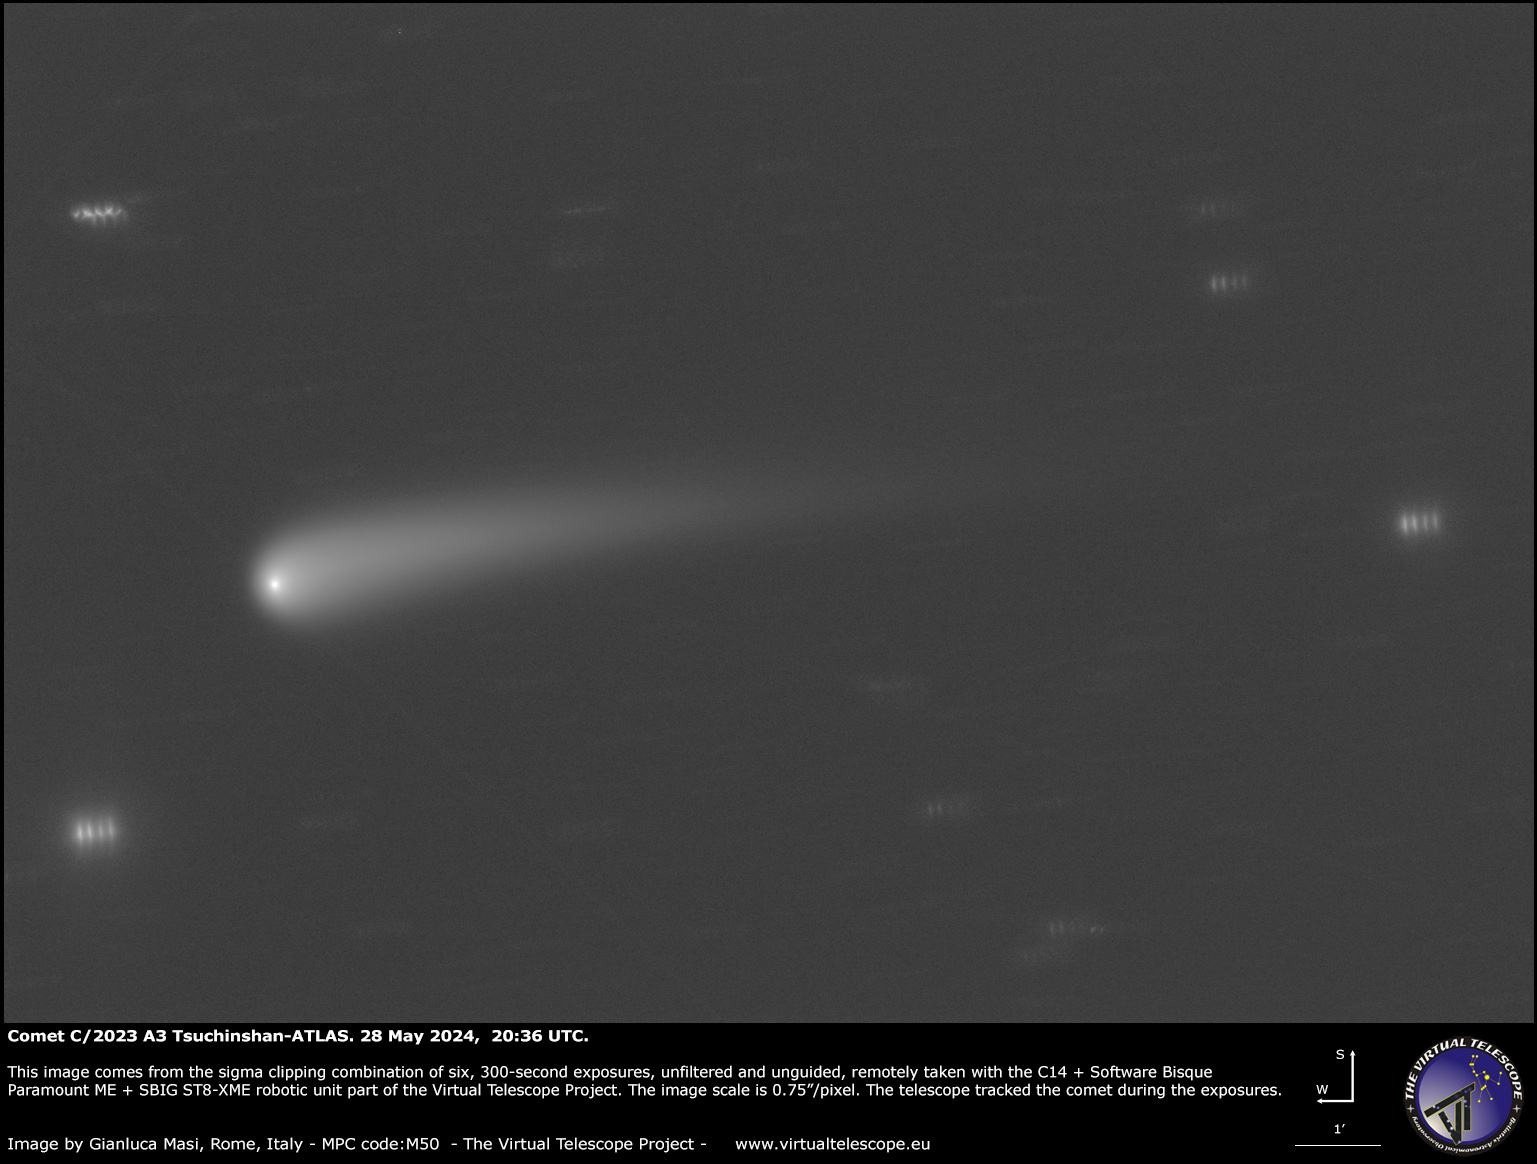 Comet C/2023 A3 TsuchinshanATLAS a new image 28 May 2024. The